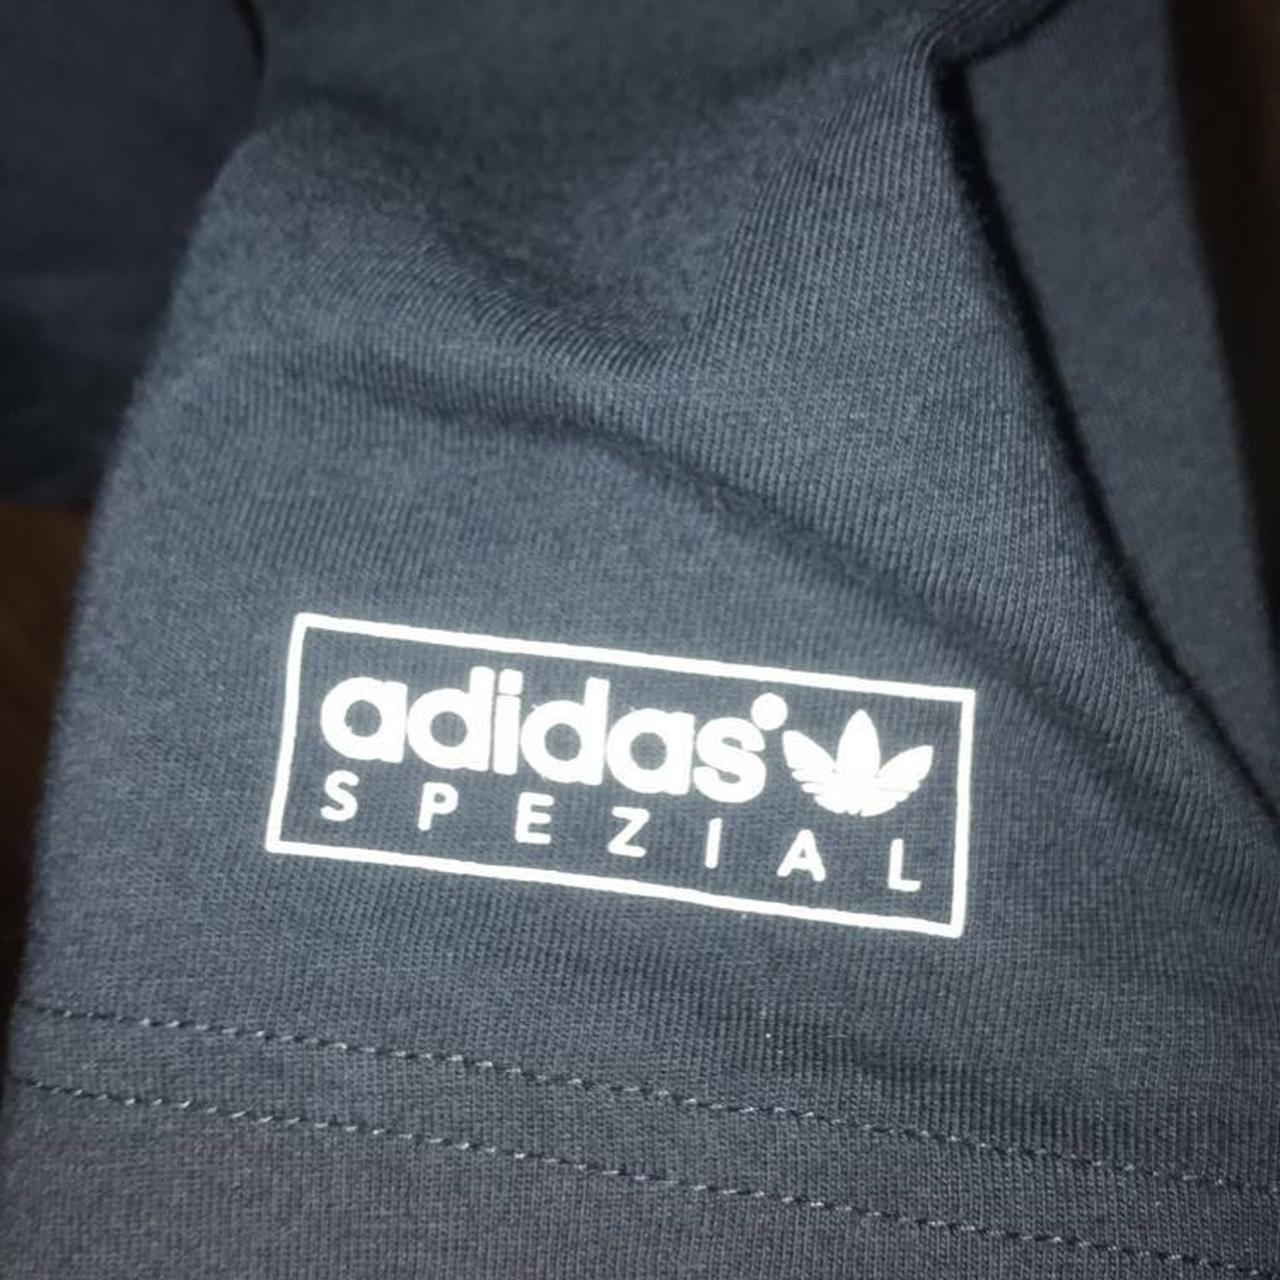 Long sleeve Adidas spezial t shirt. Barely worn - Depop